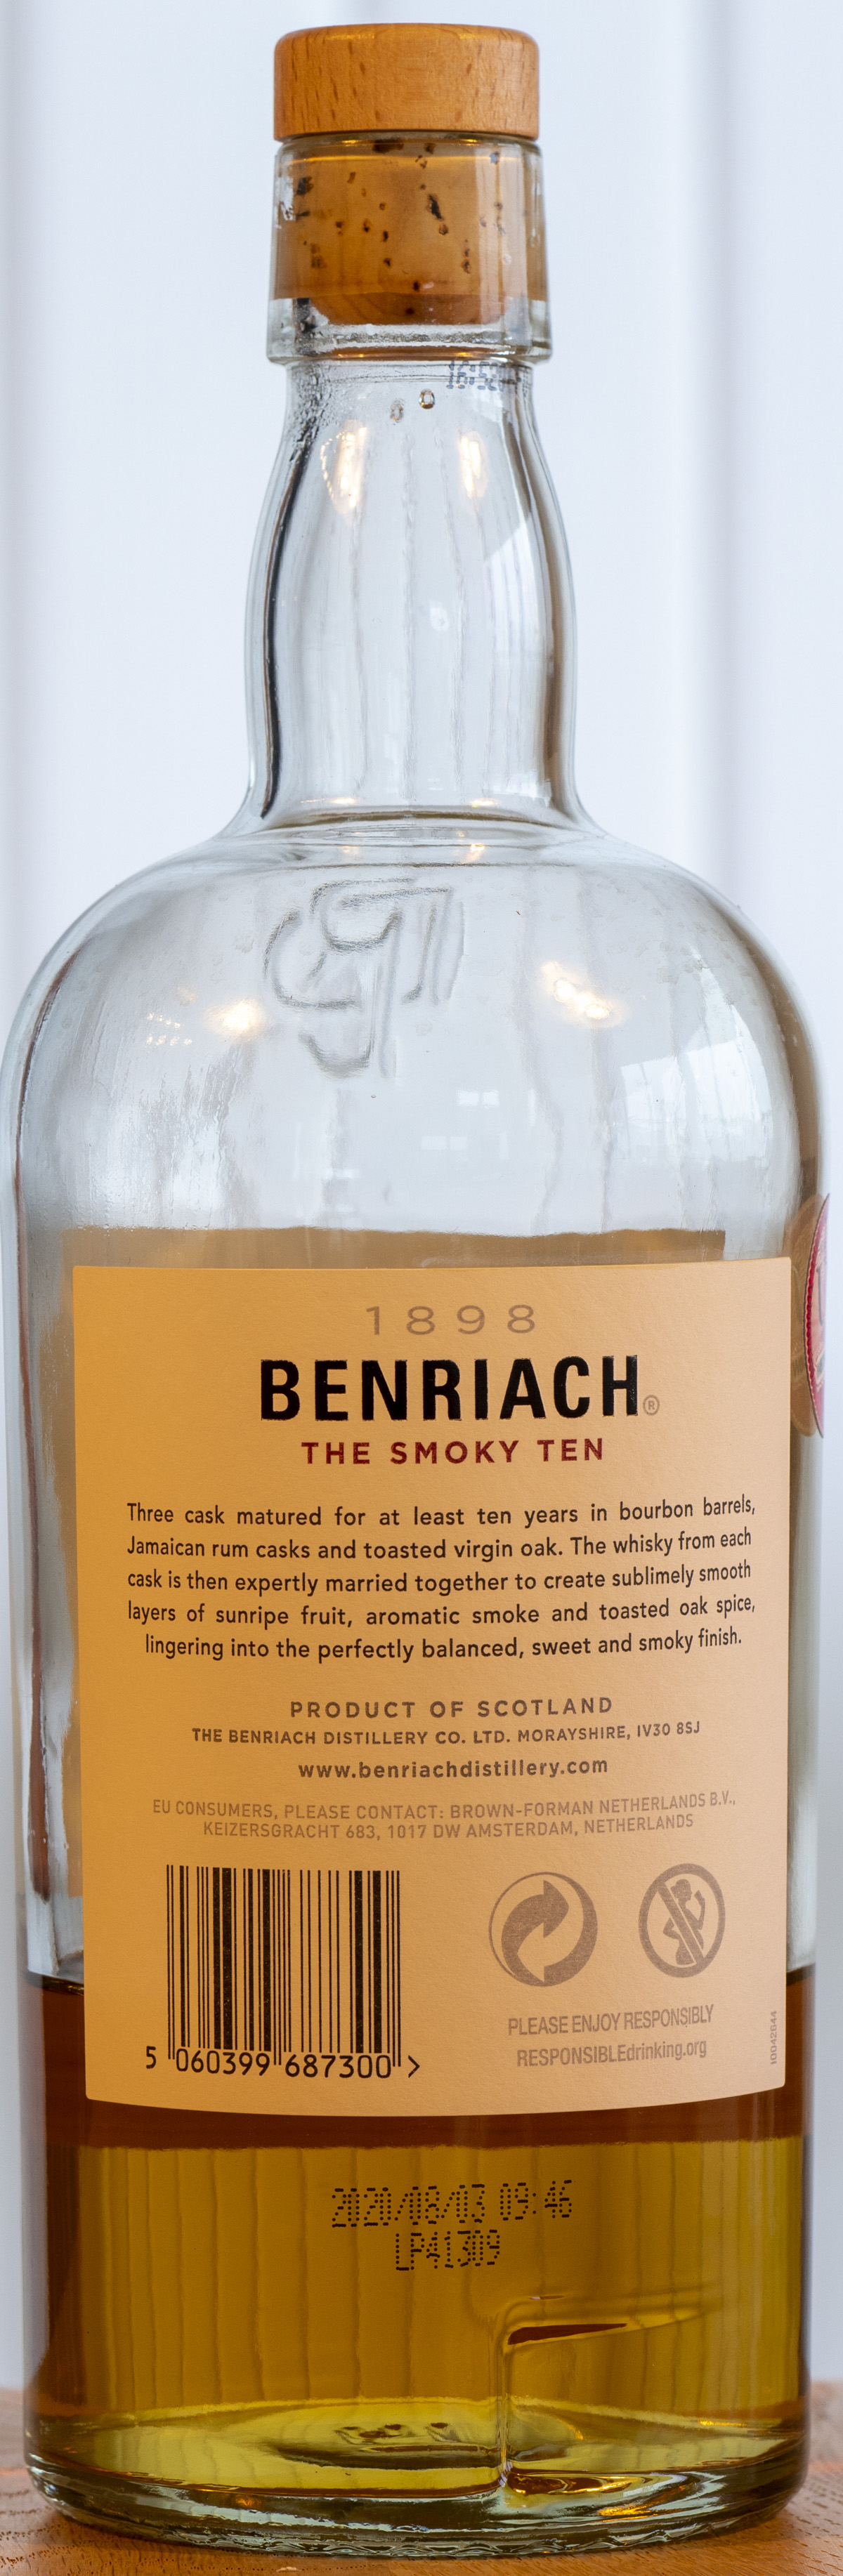 Billede: PHC_3902 - Benriach The Smoky Ten - bottle back.jpg